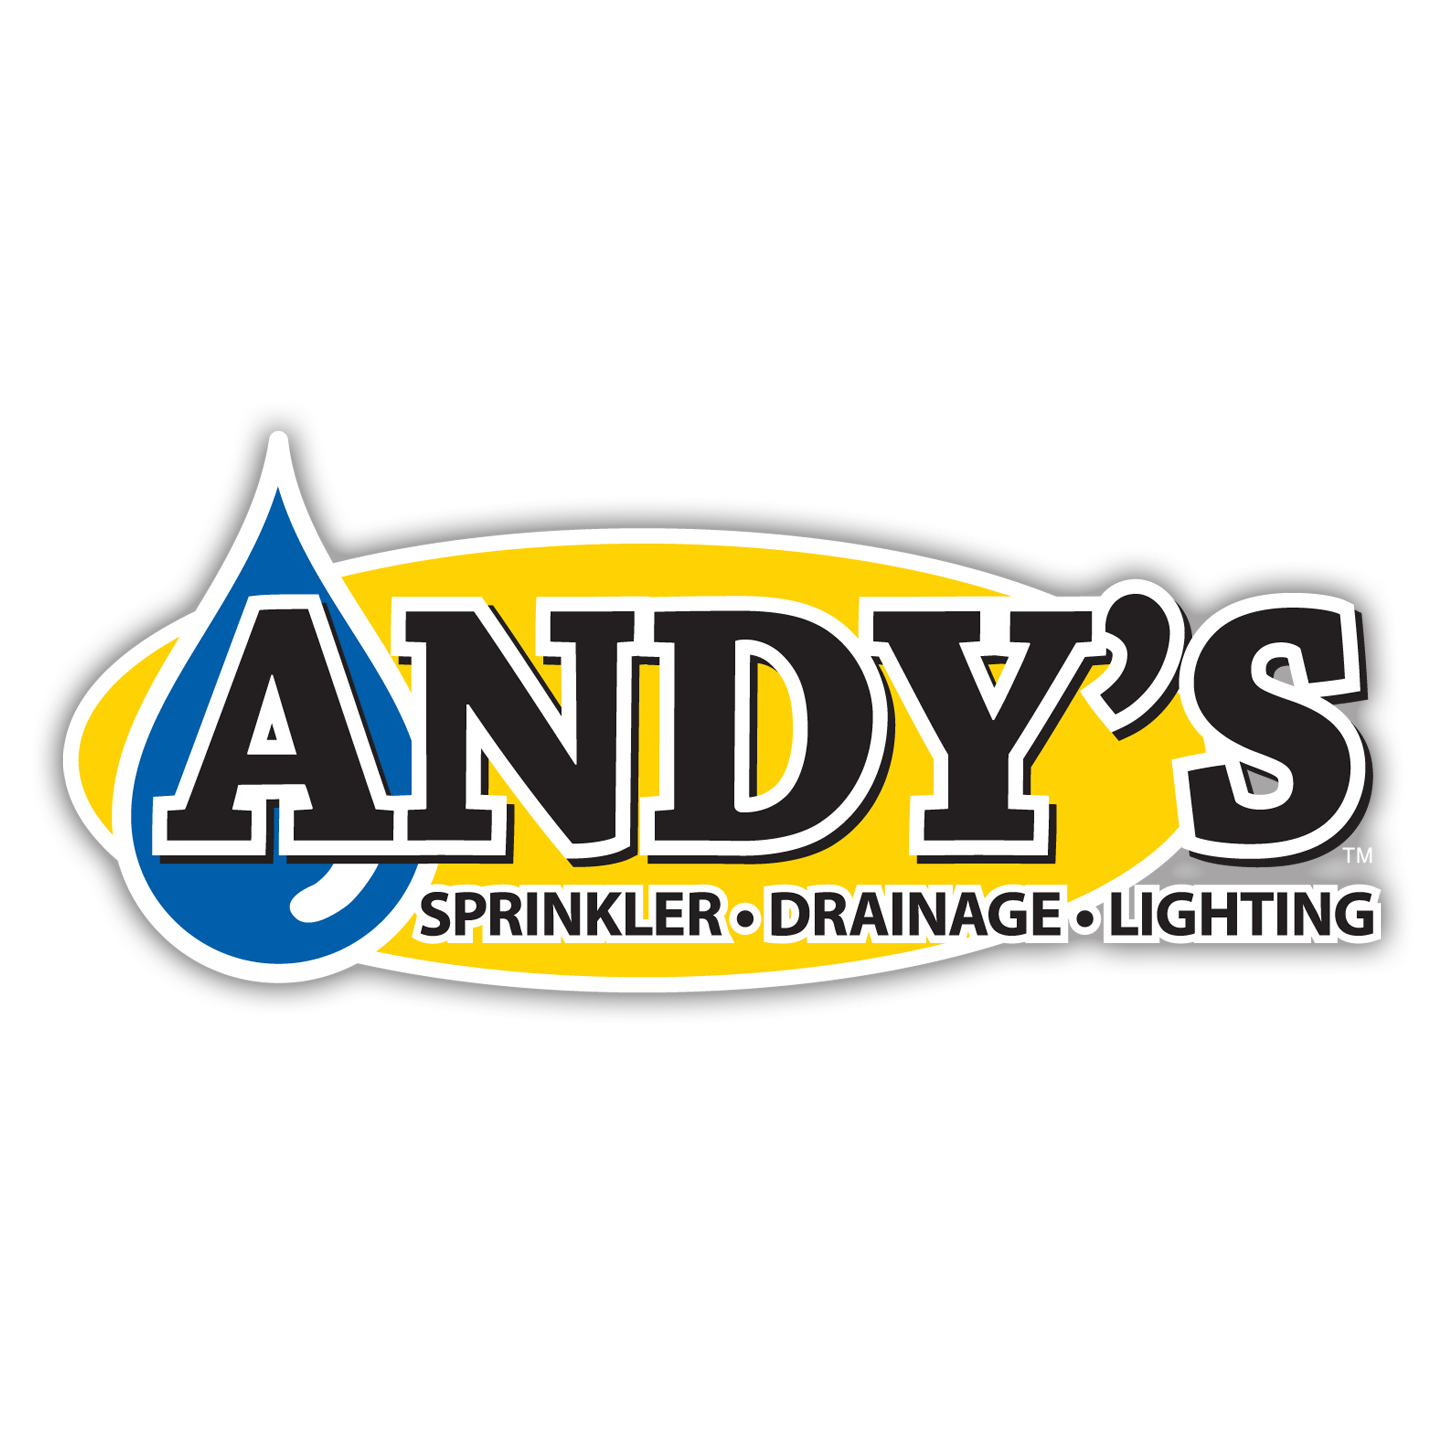 Andy's Sprinkler, Drainage & Lighting North Charleston (866)557-0058